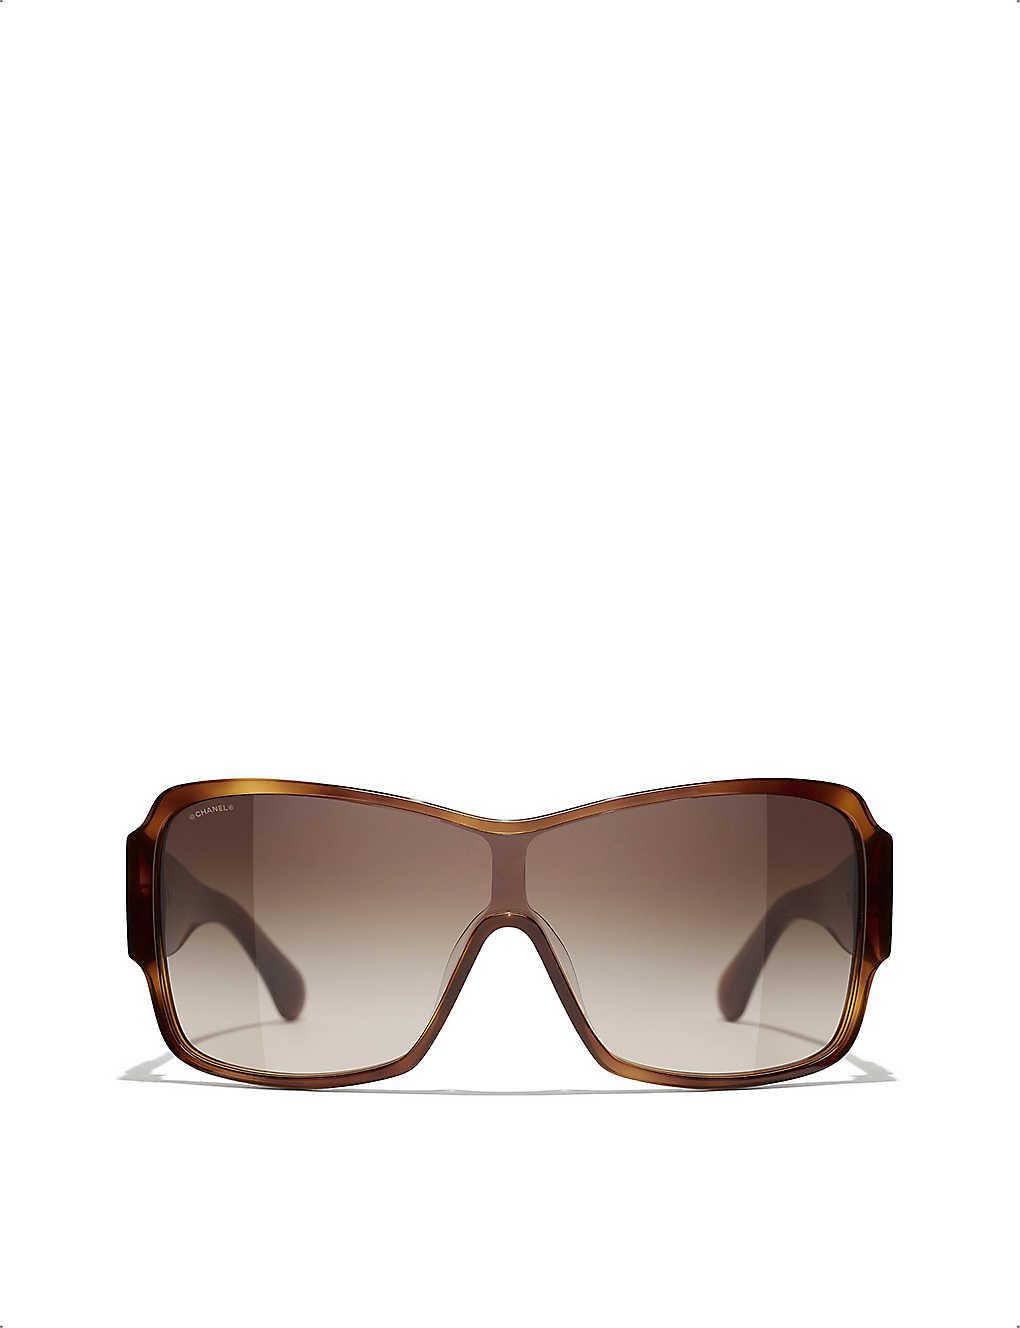 Sunglasses Square Sunglasses acetate  lambskin  Fashion  CHANEL